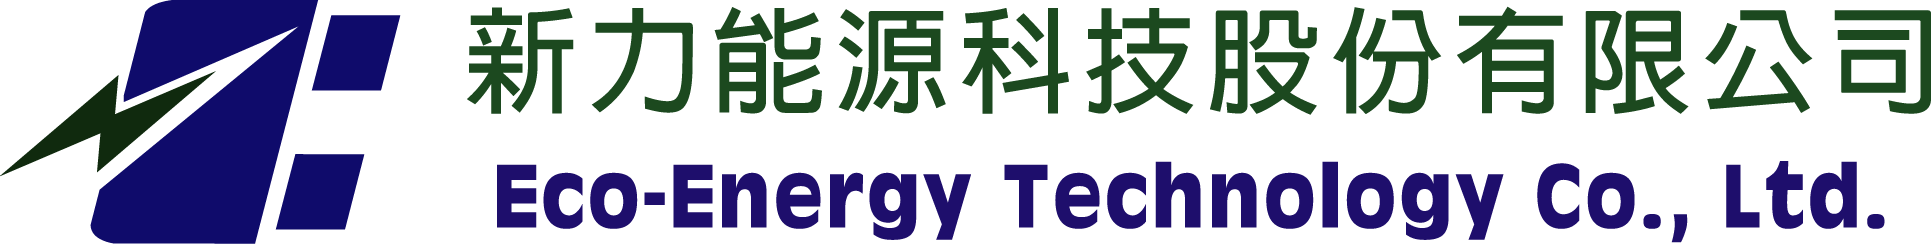 Eco-Energy Technology Co., Ltd.